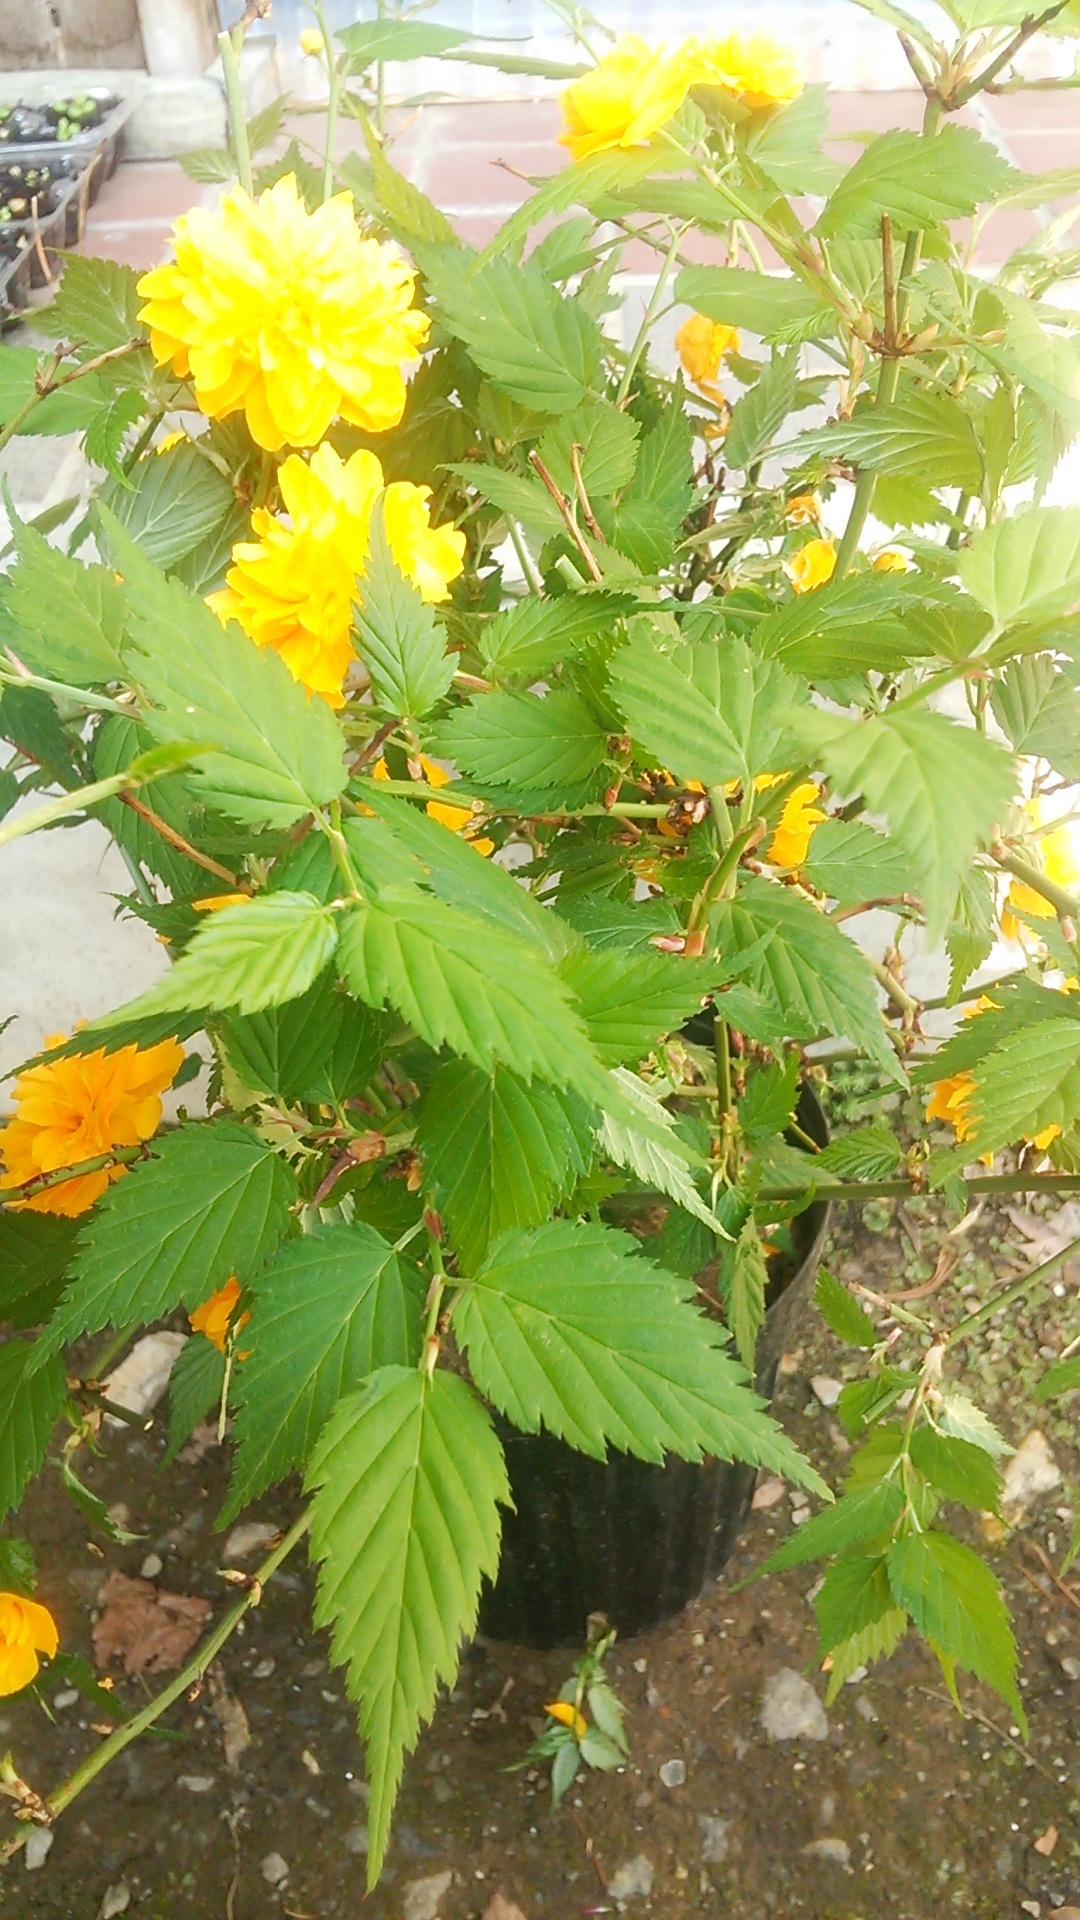 Nakaの楽しく生活40代主婦 鮮やかな黄色の花がかわいい 八重山吹の鉢植えに挑戦